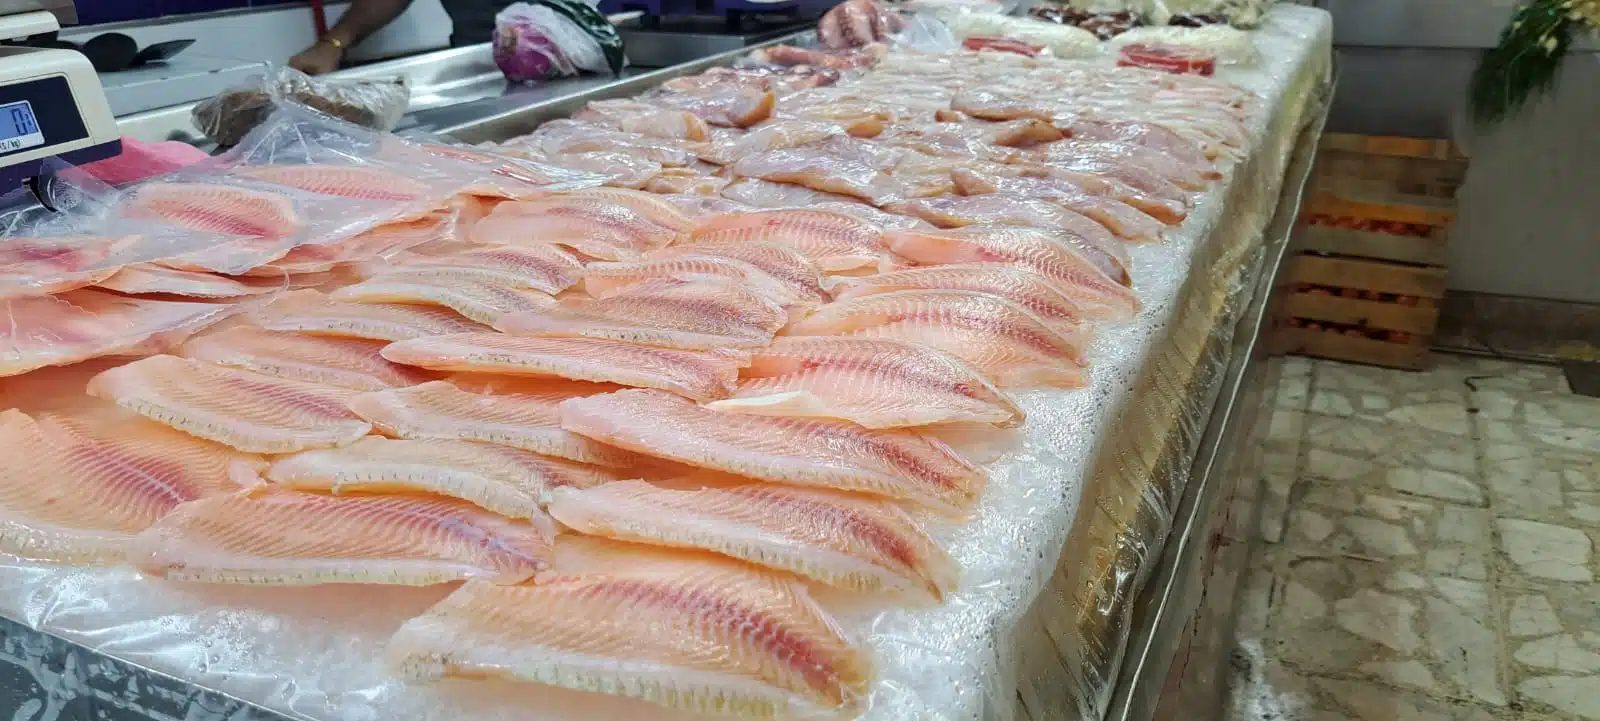 Venta de pescado fresco en la zona centro de Sinaloa